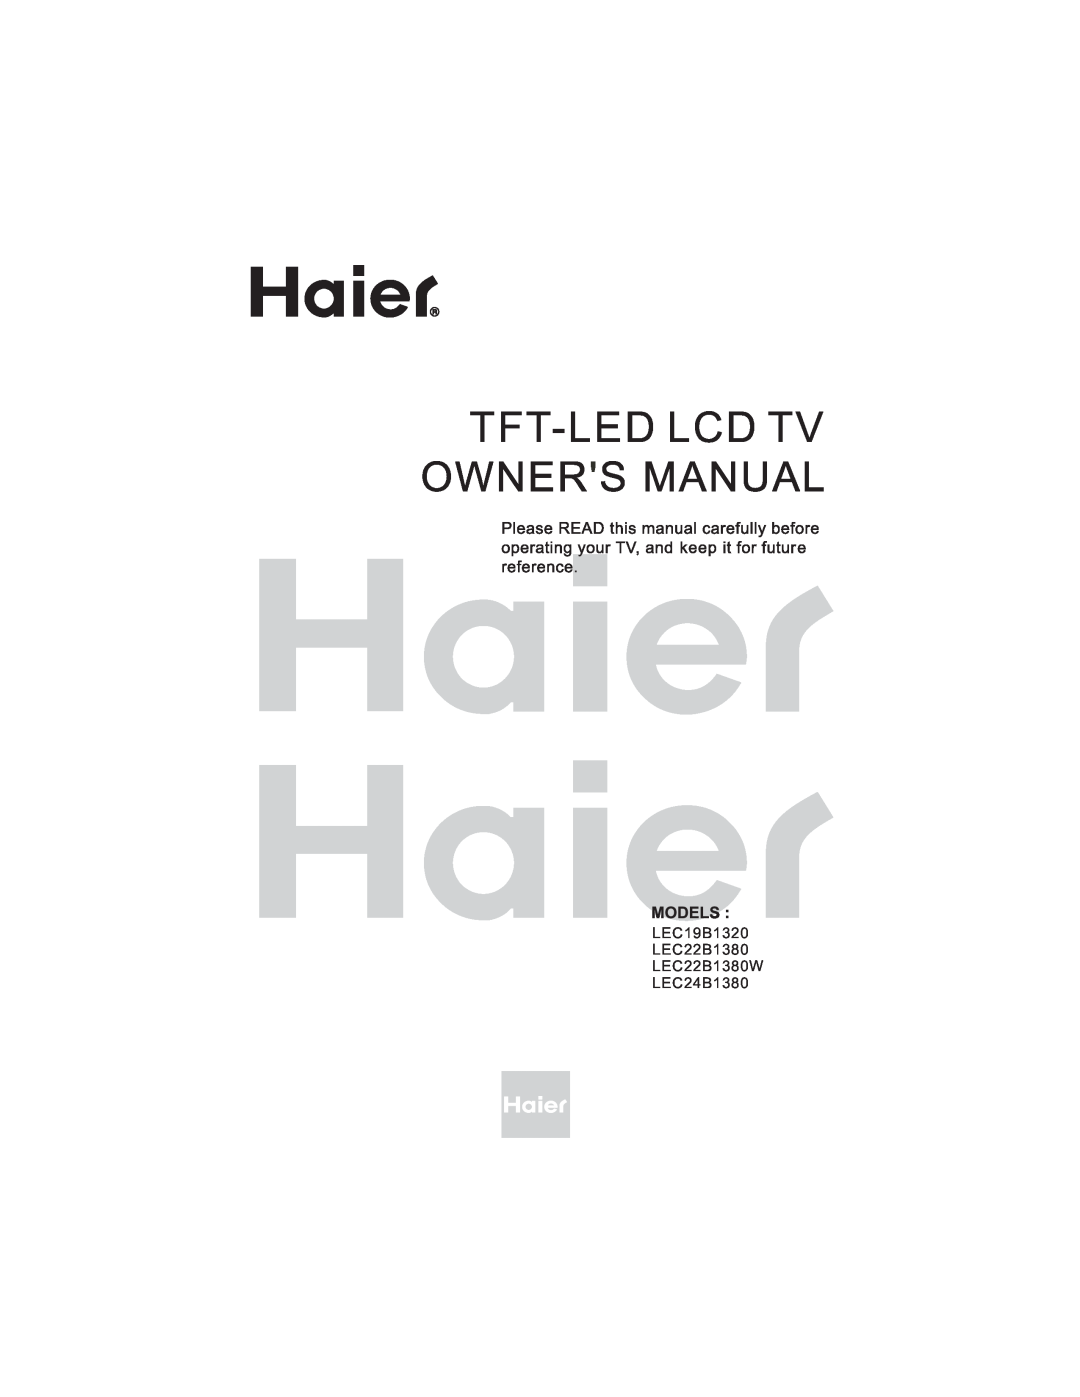 Haier manual Tft-Led Lcd Tv, LEC19B1320 LEC22B1380 LEC22B1380W LEC24B1380 